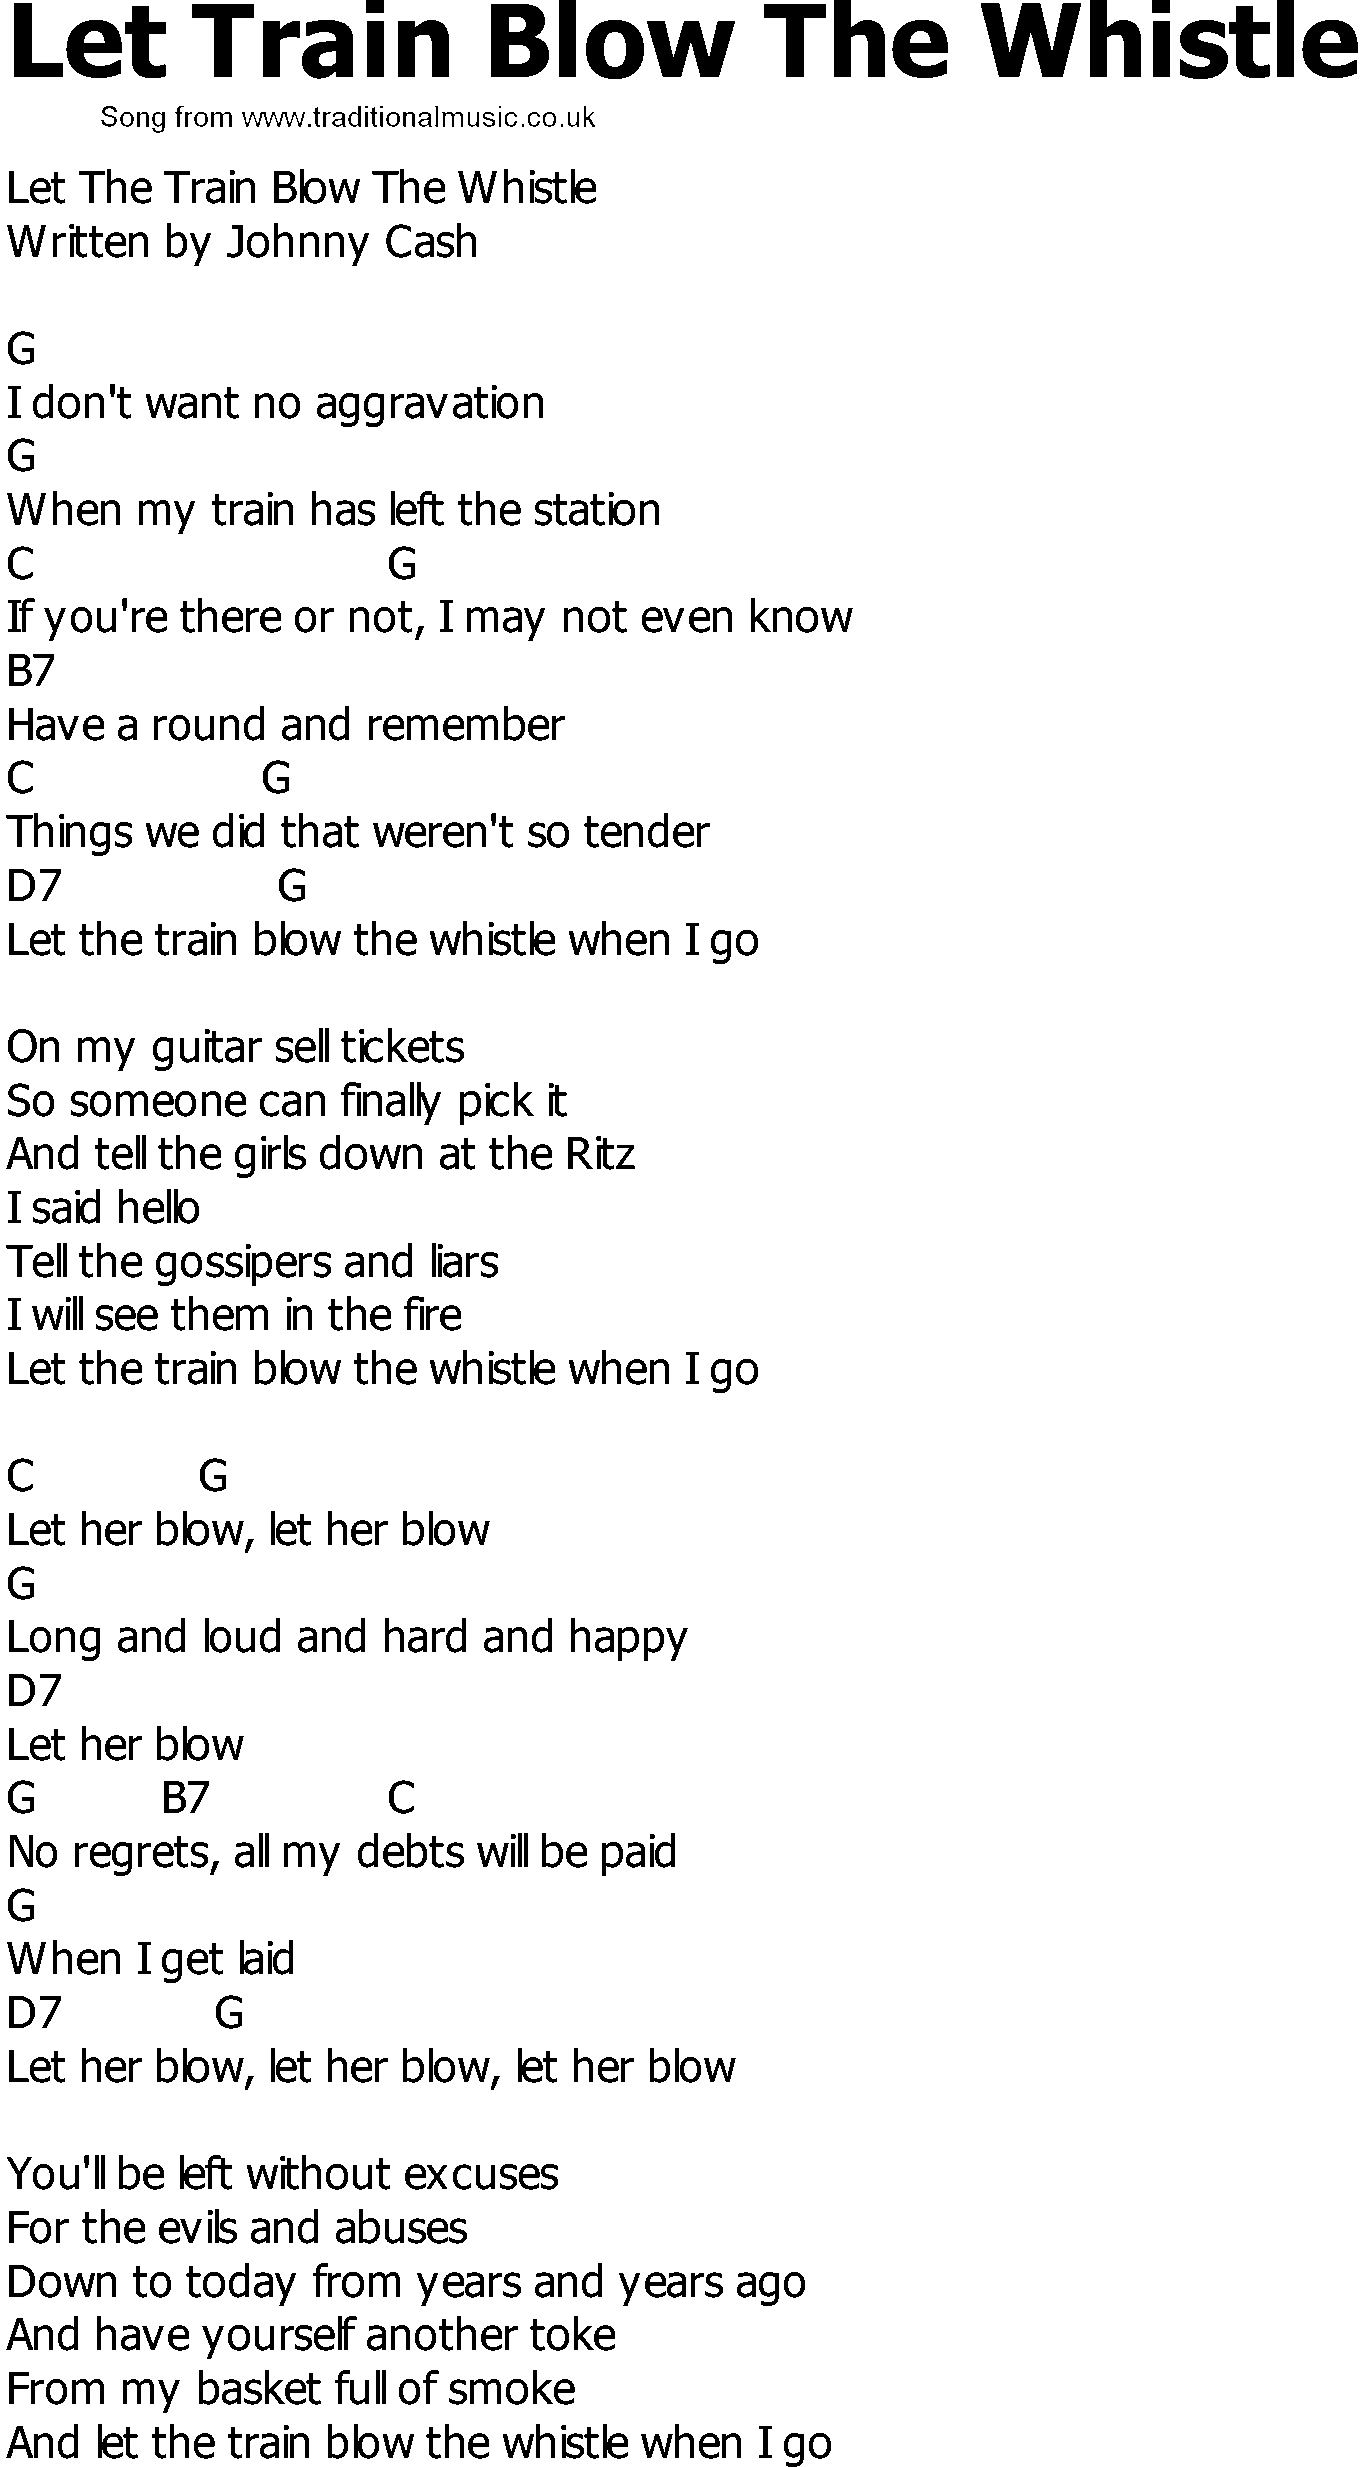 Whistle lyrics